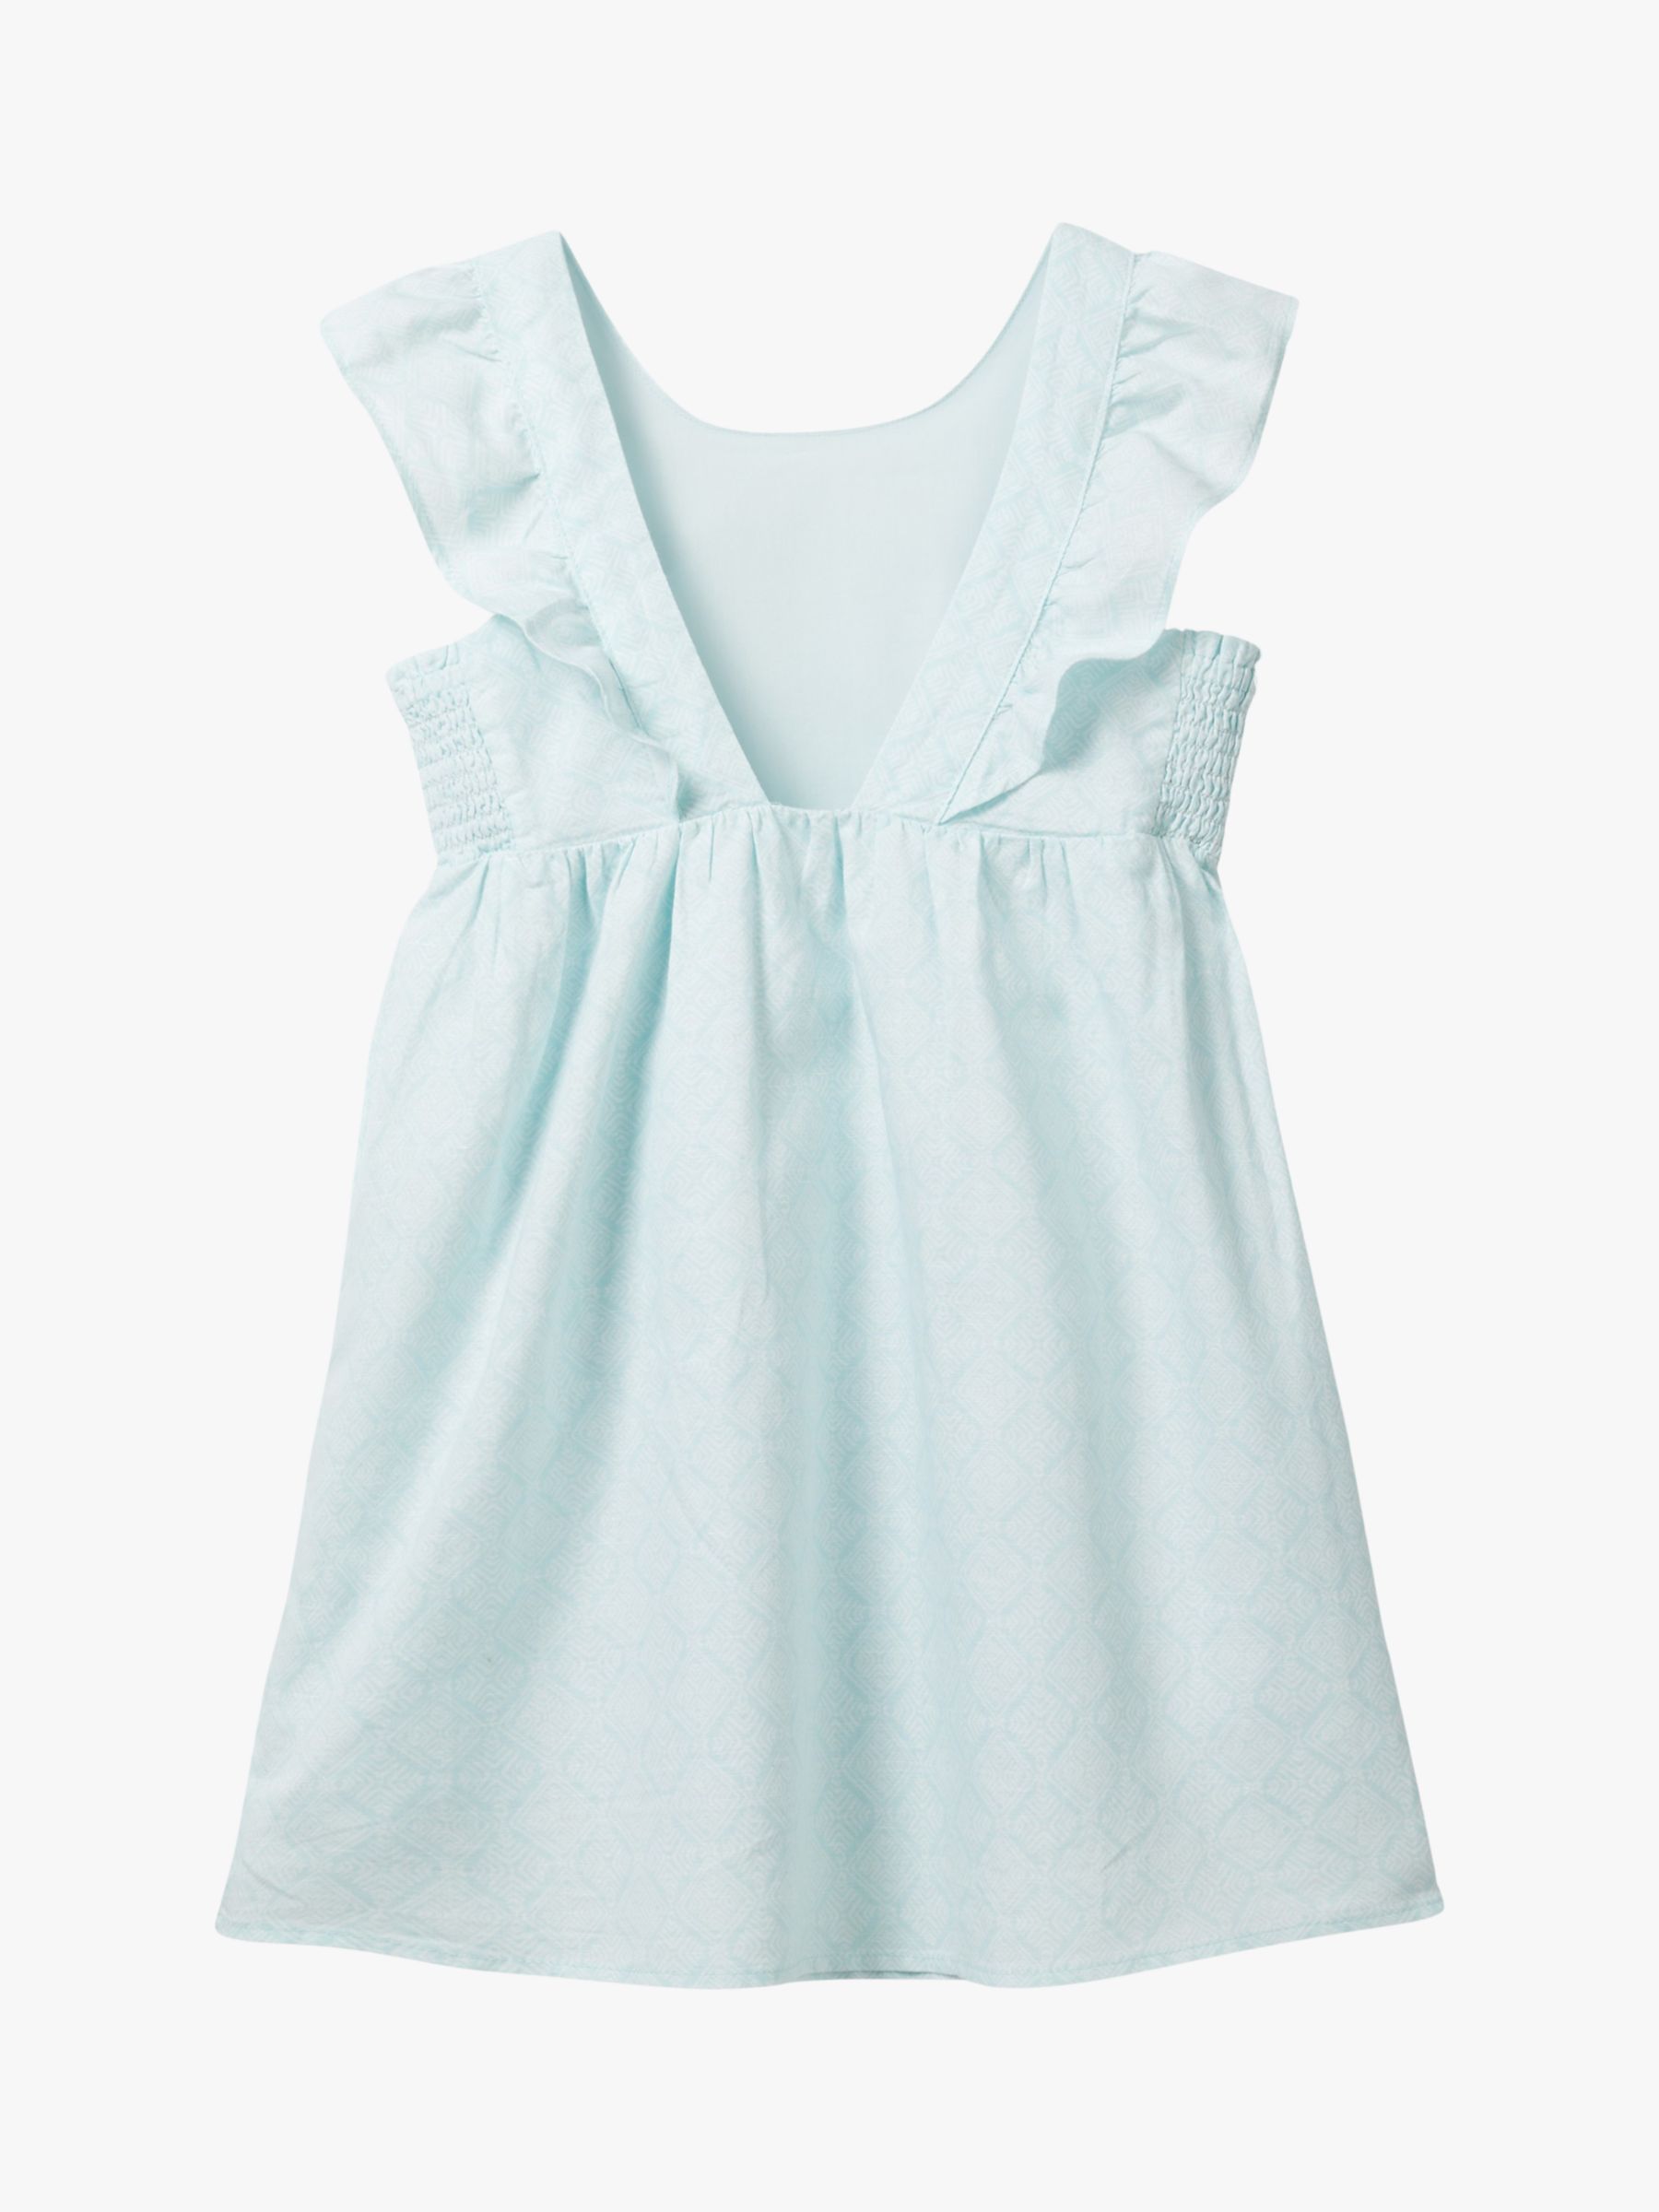 Benetton Kids' Linen Blend Geometric Print Dress, Blue/Multi, 6-7 years